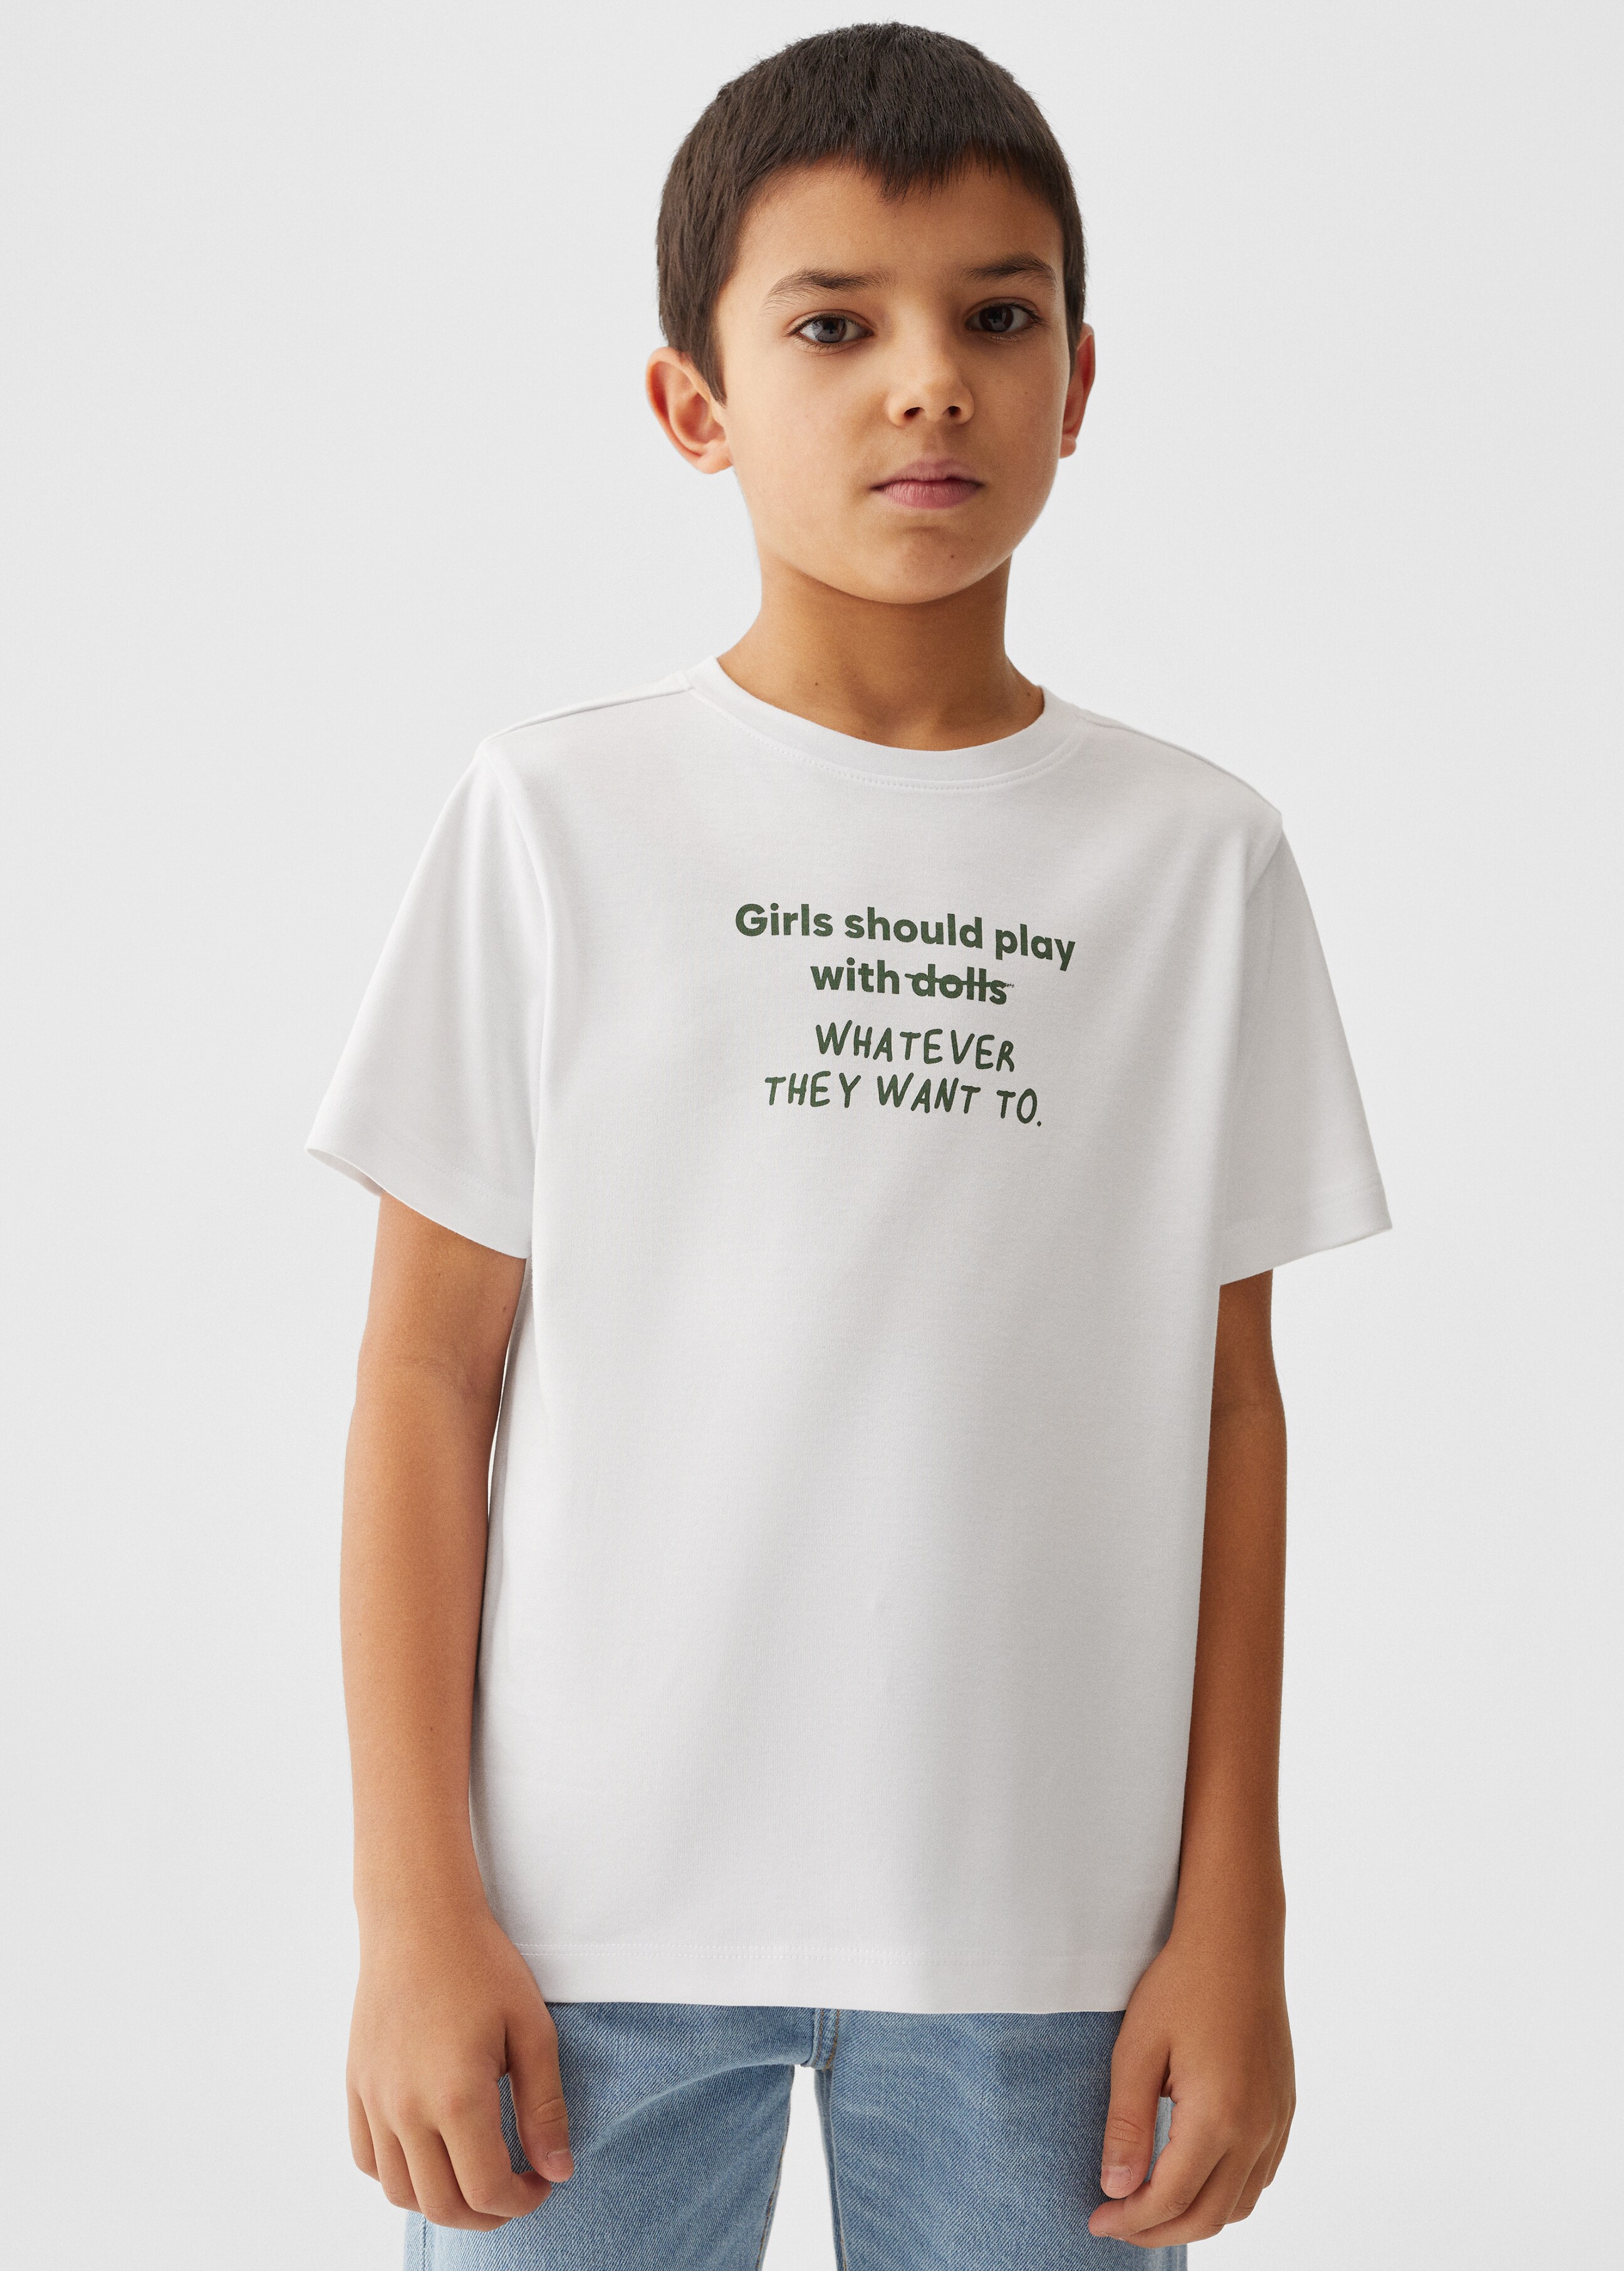 Women's Day t-shirt / KIDS - Medium plane